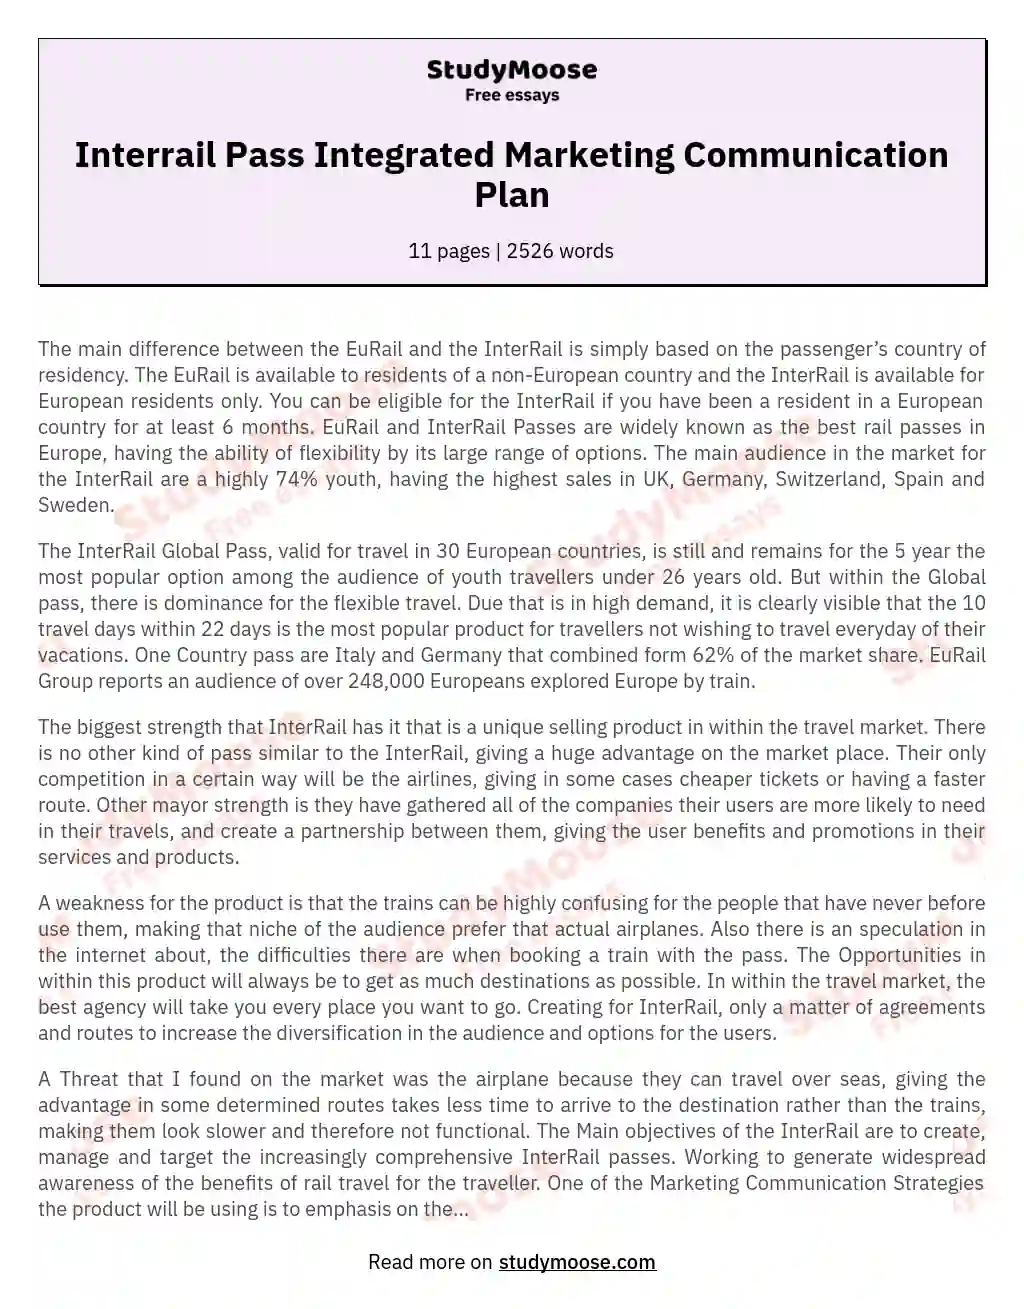 Interrail Pass Integrated Marketing Communication Plan